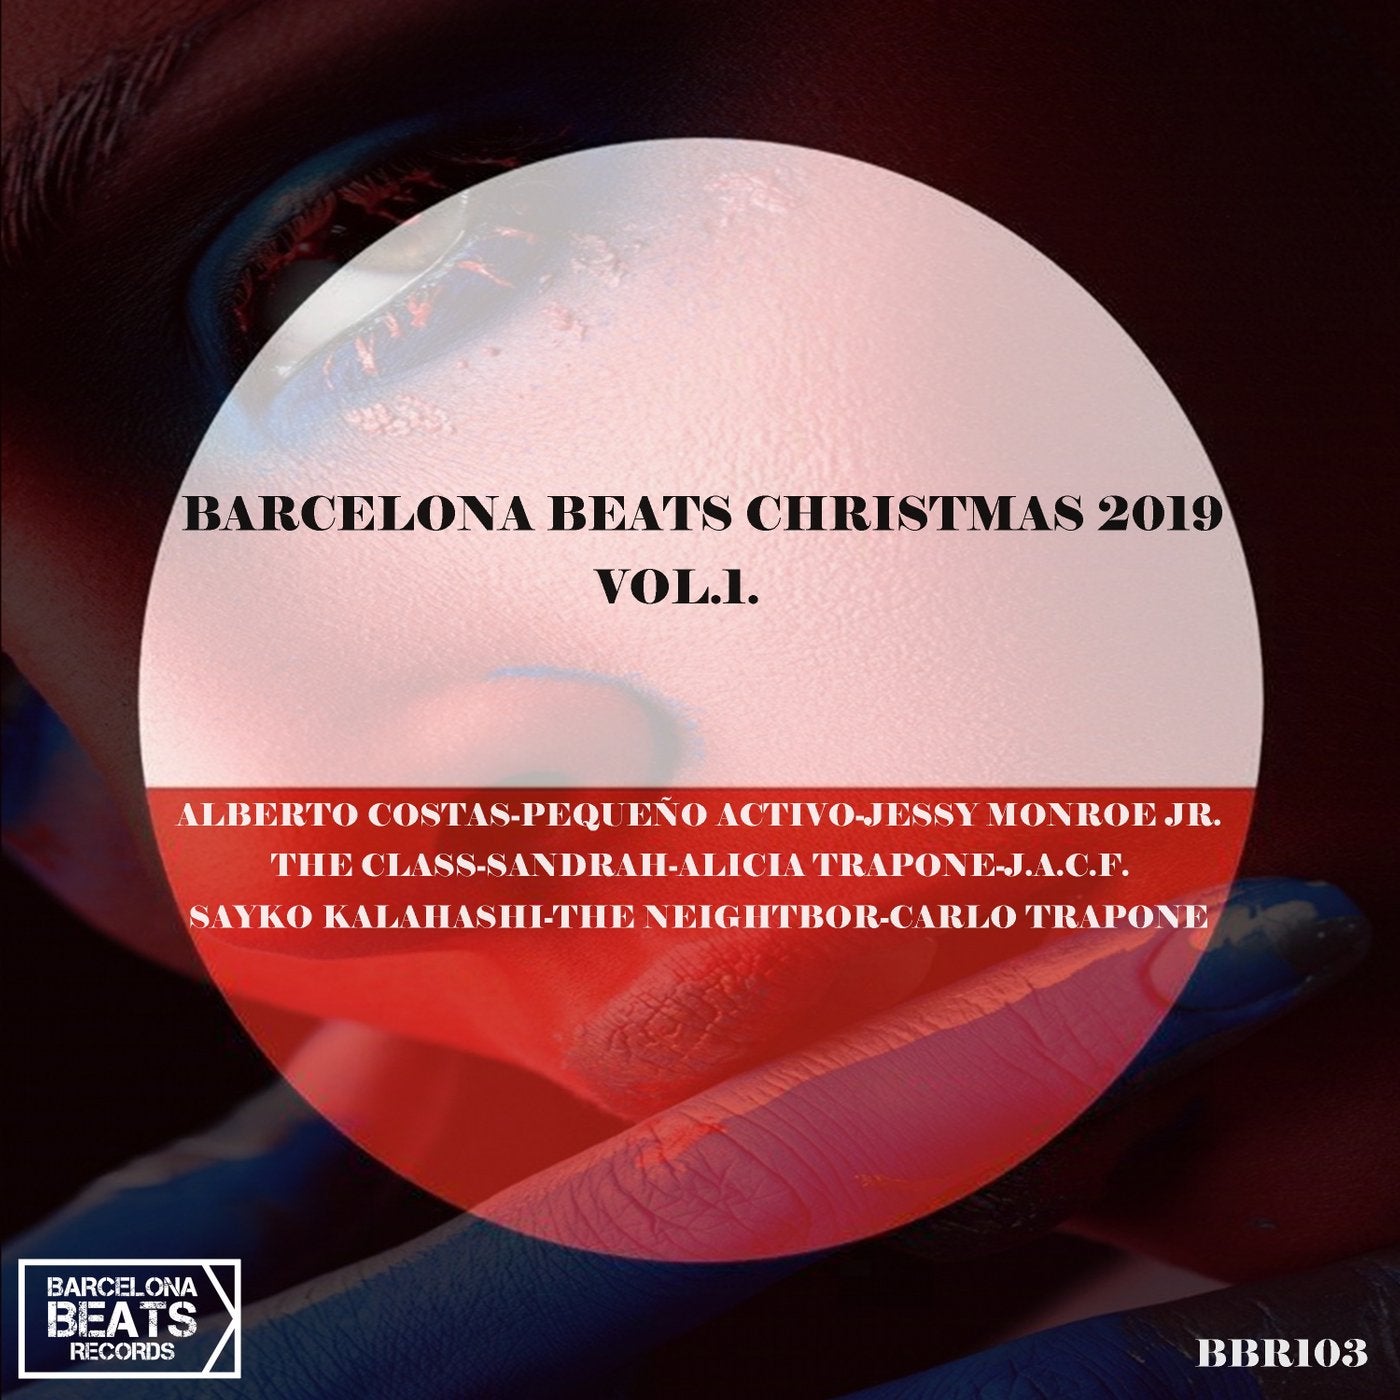 Barcelona Beats Christmas 2019, Vol. 1